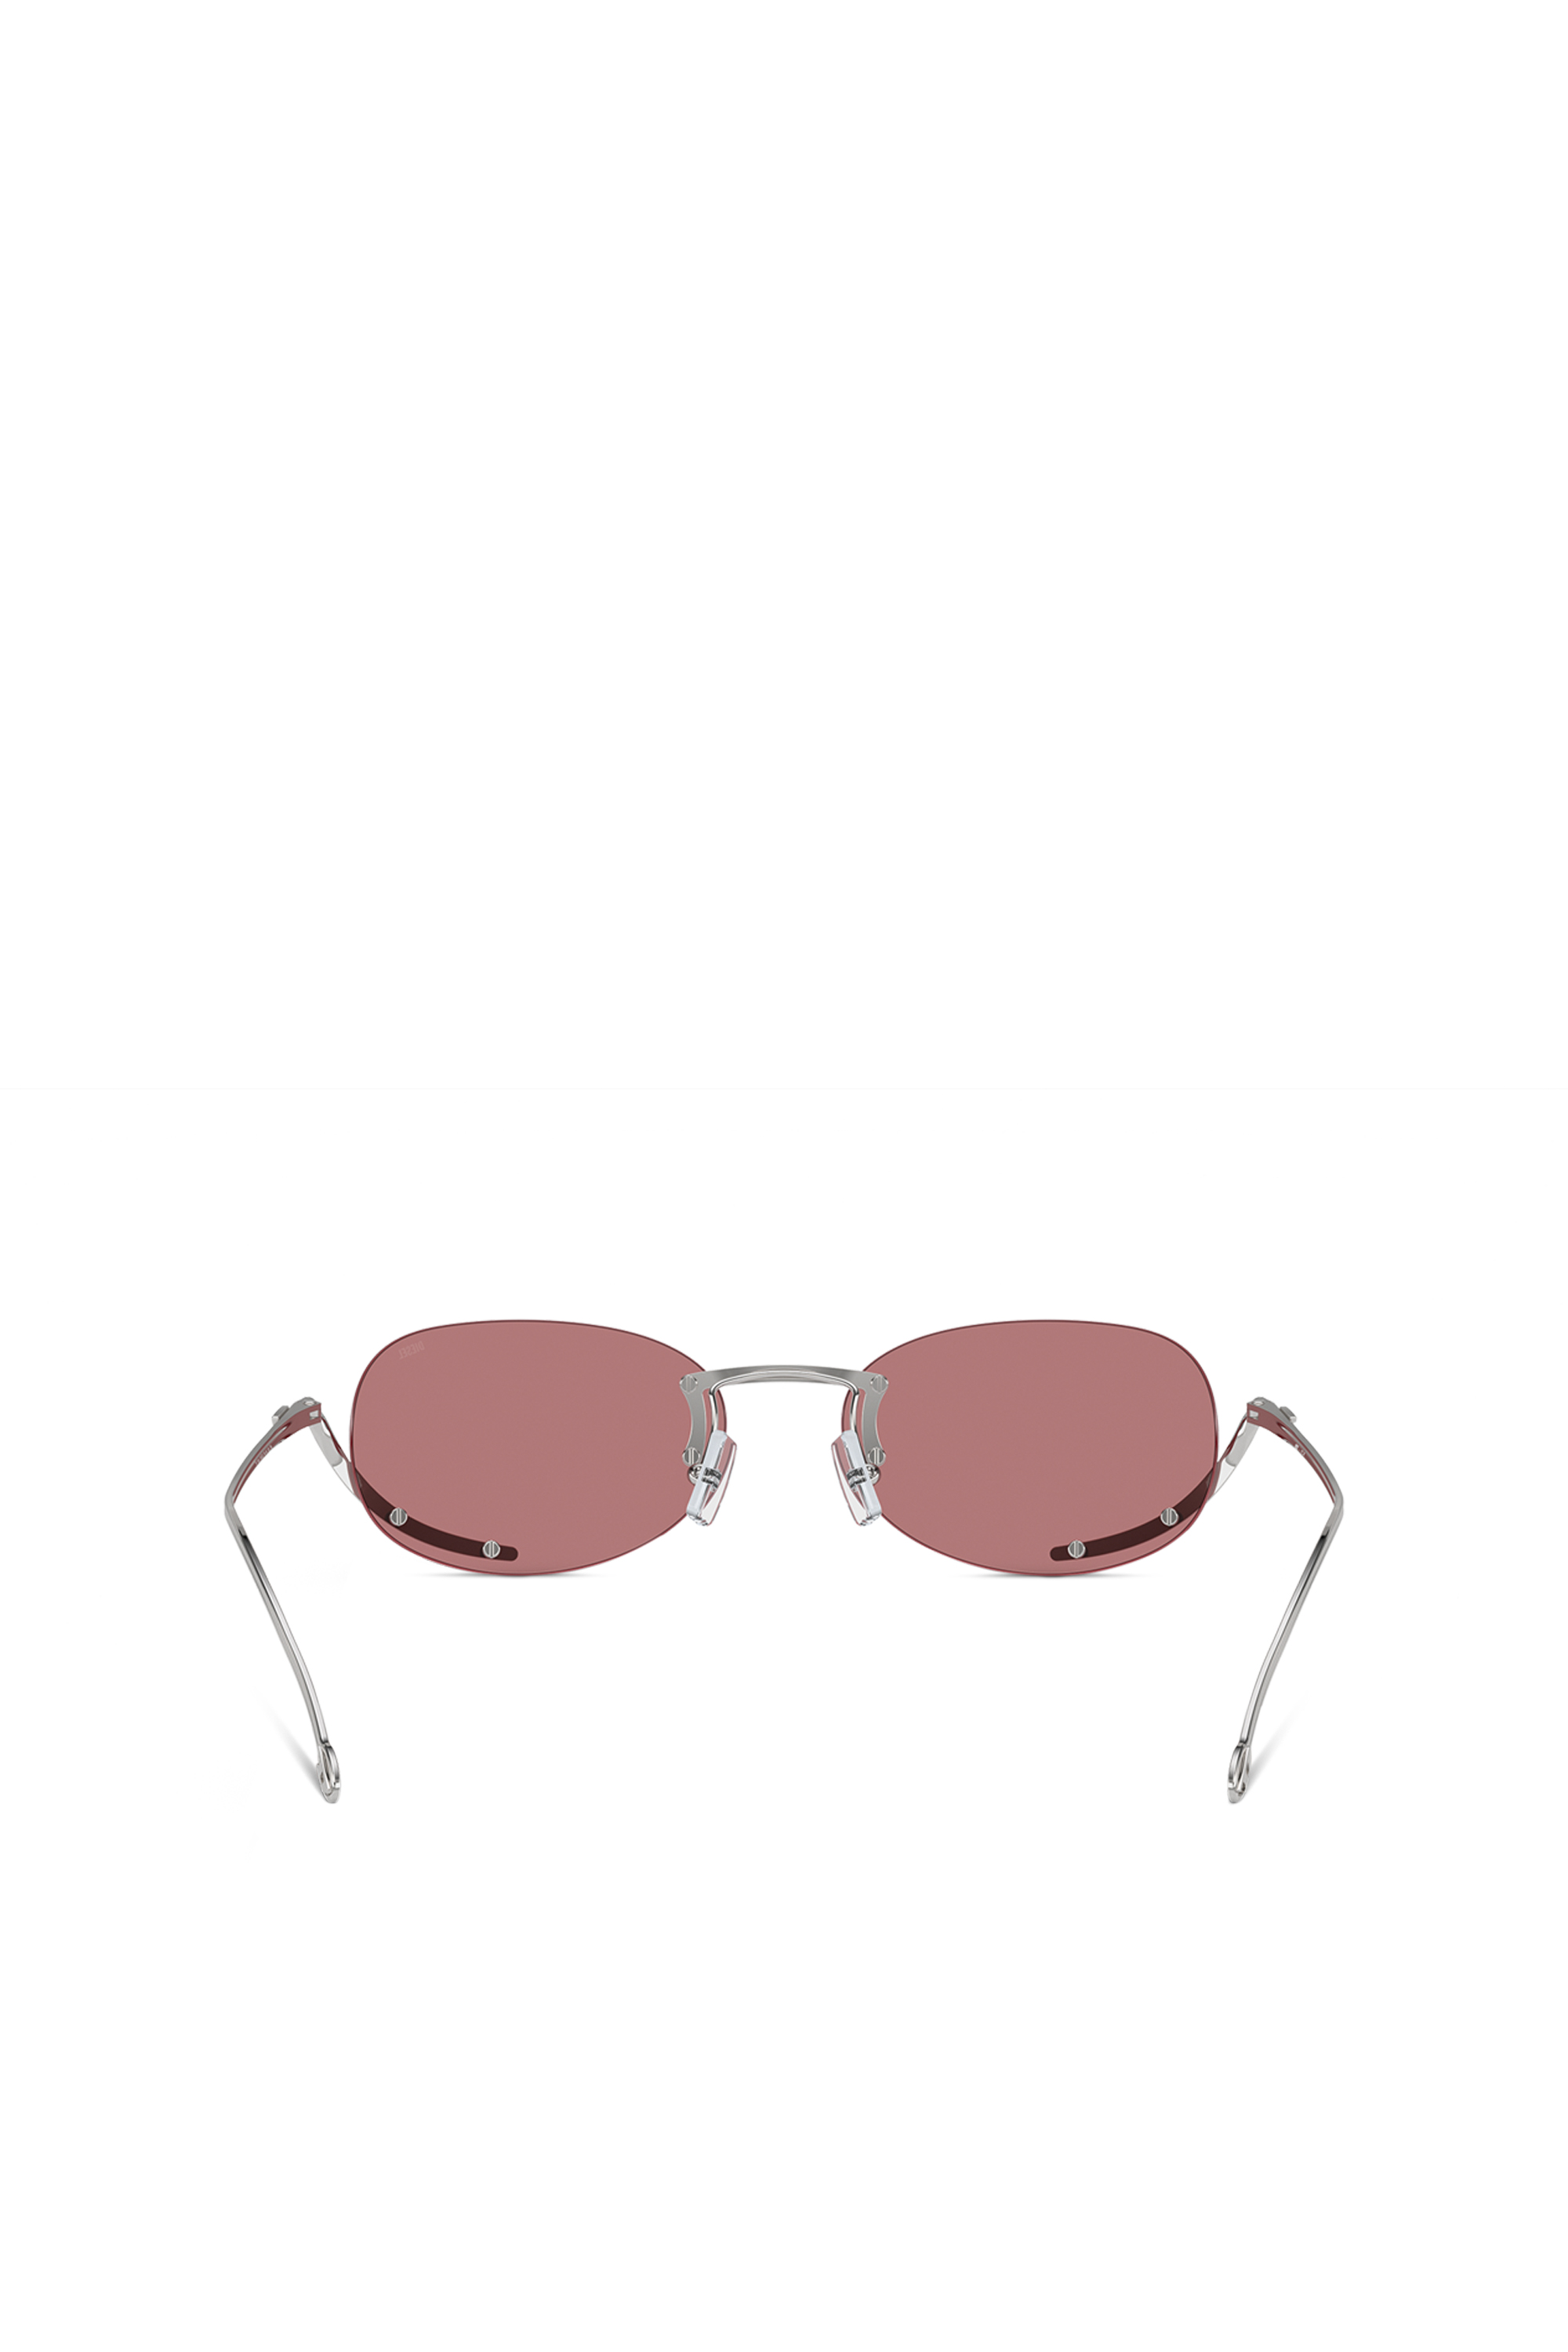 Women's Sunglasses: Round, Square, Oval